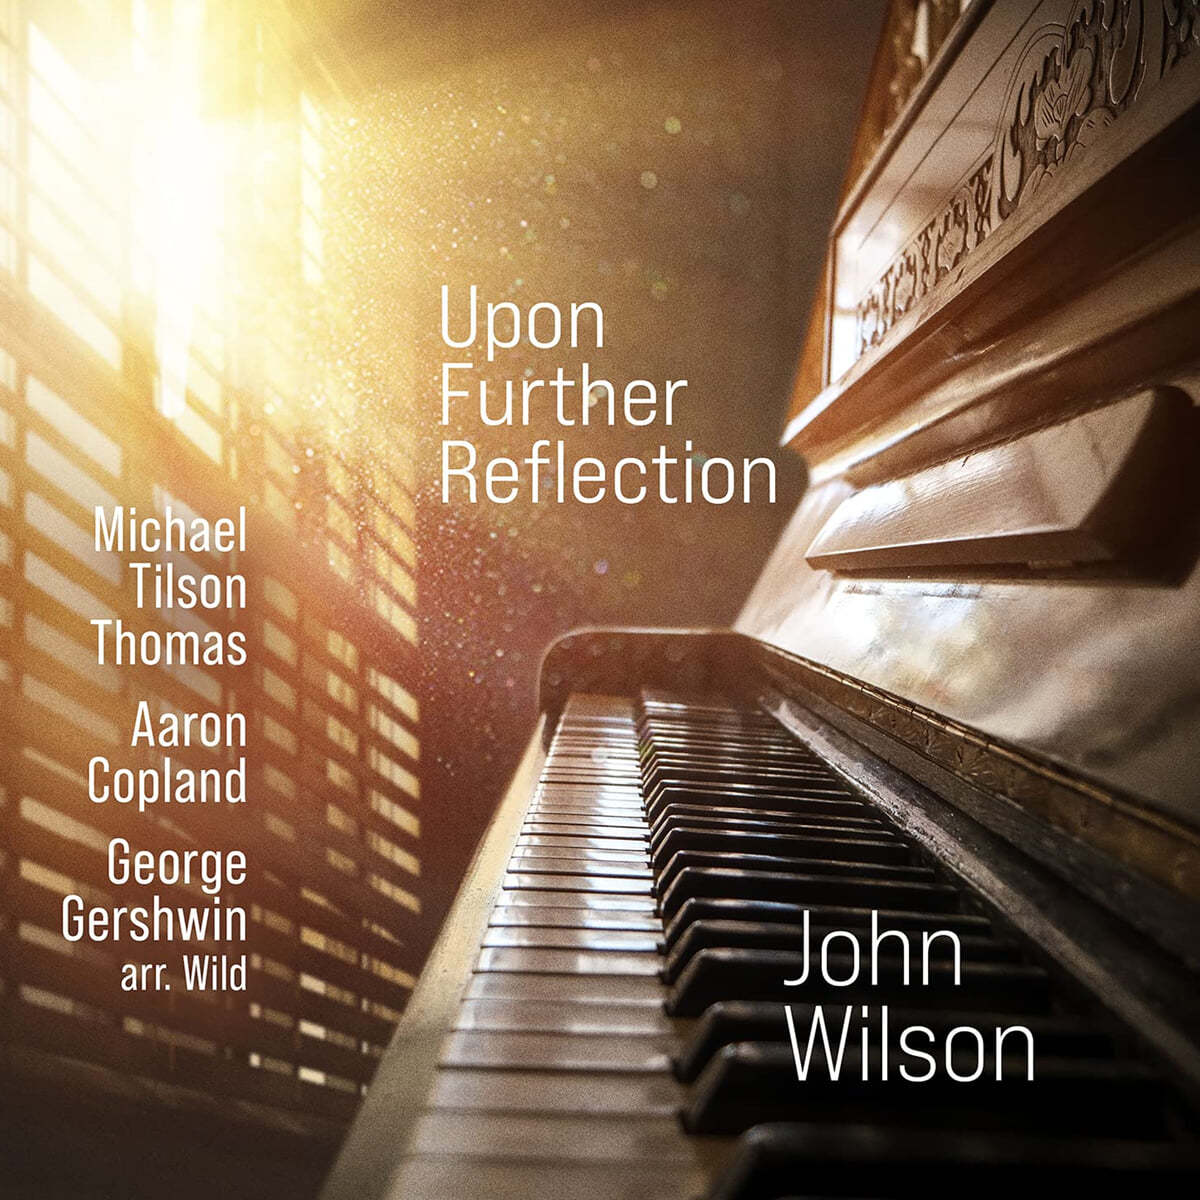 John Wilson 틸슨 토머스: &#39;깊어지는 명상&#39; / 와일드: 거슈윈 노래에 의한 에튀드 / 코플런드: 피아노 소나타 (Upon Further Reflection)